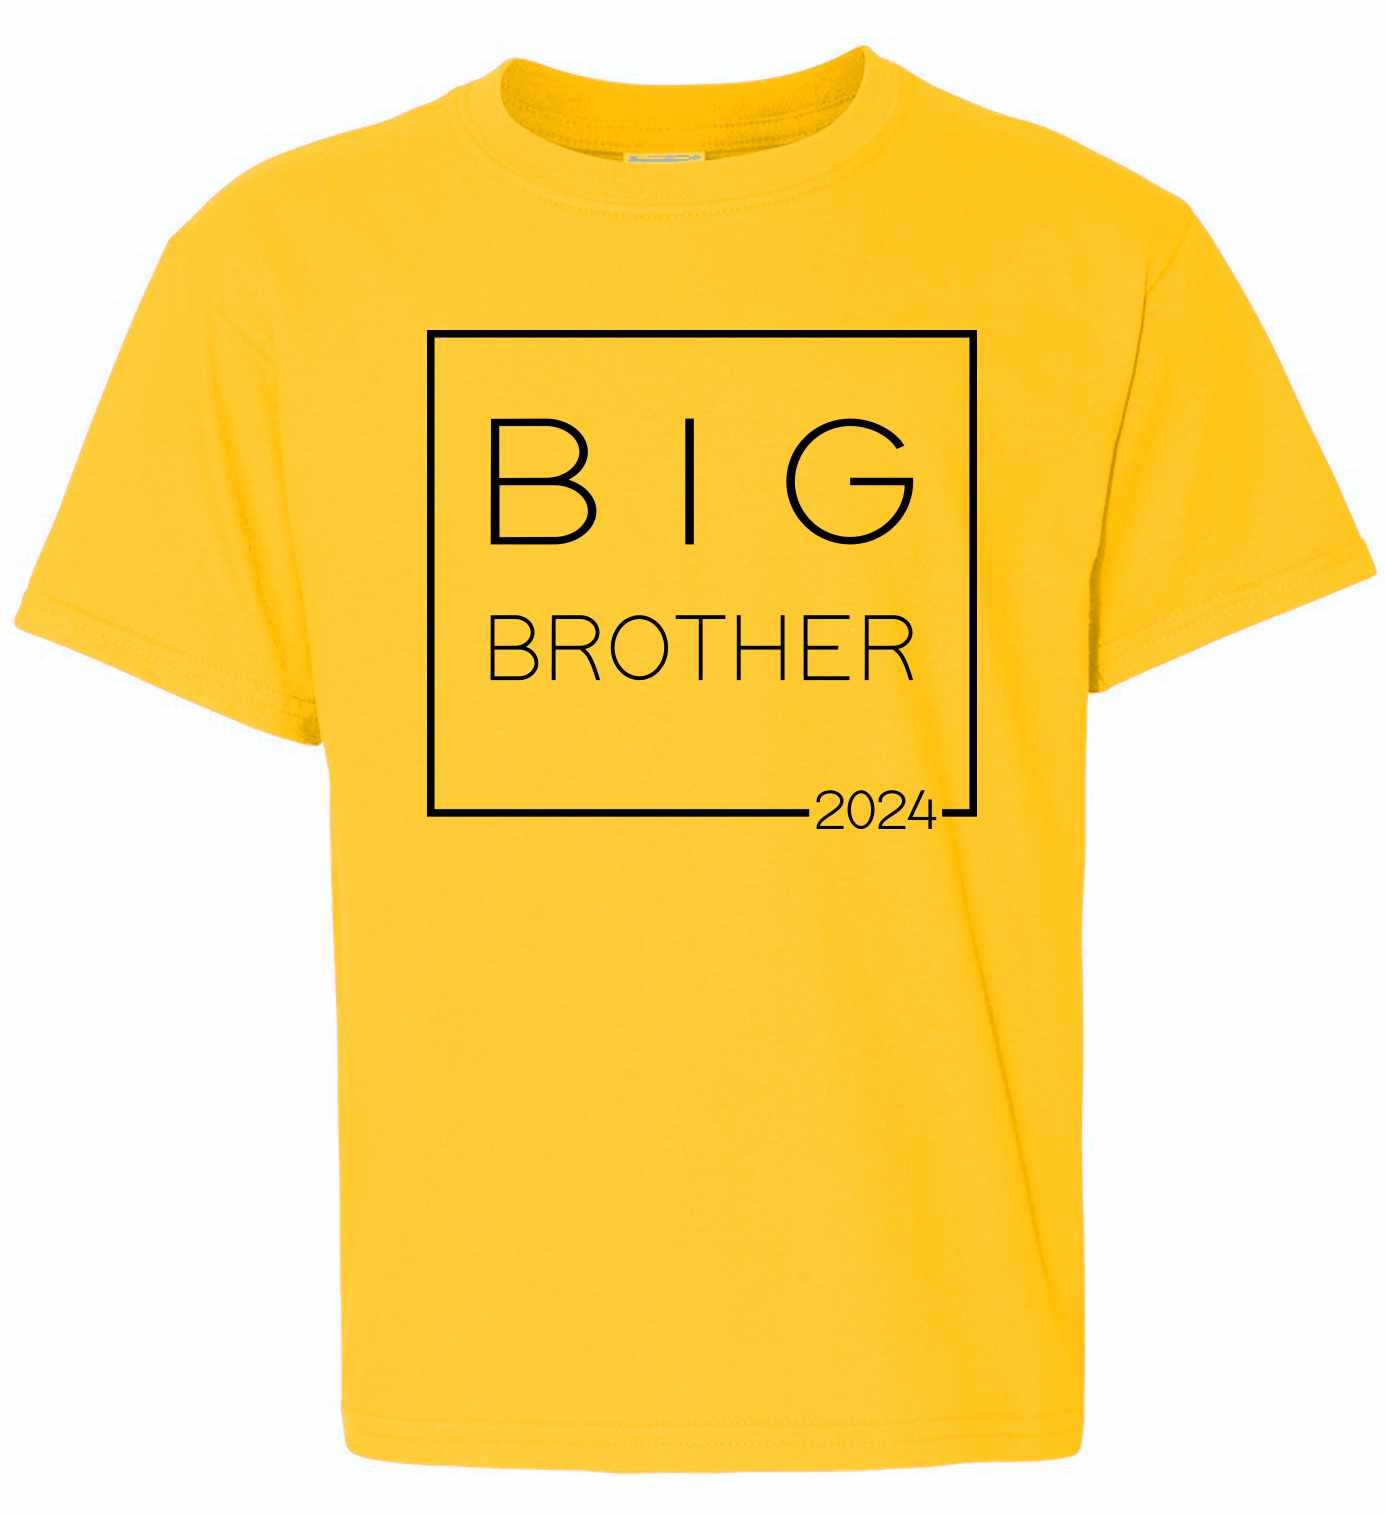 Big Brother Box 2024 on Kids T-Shirt